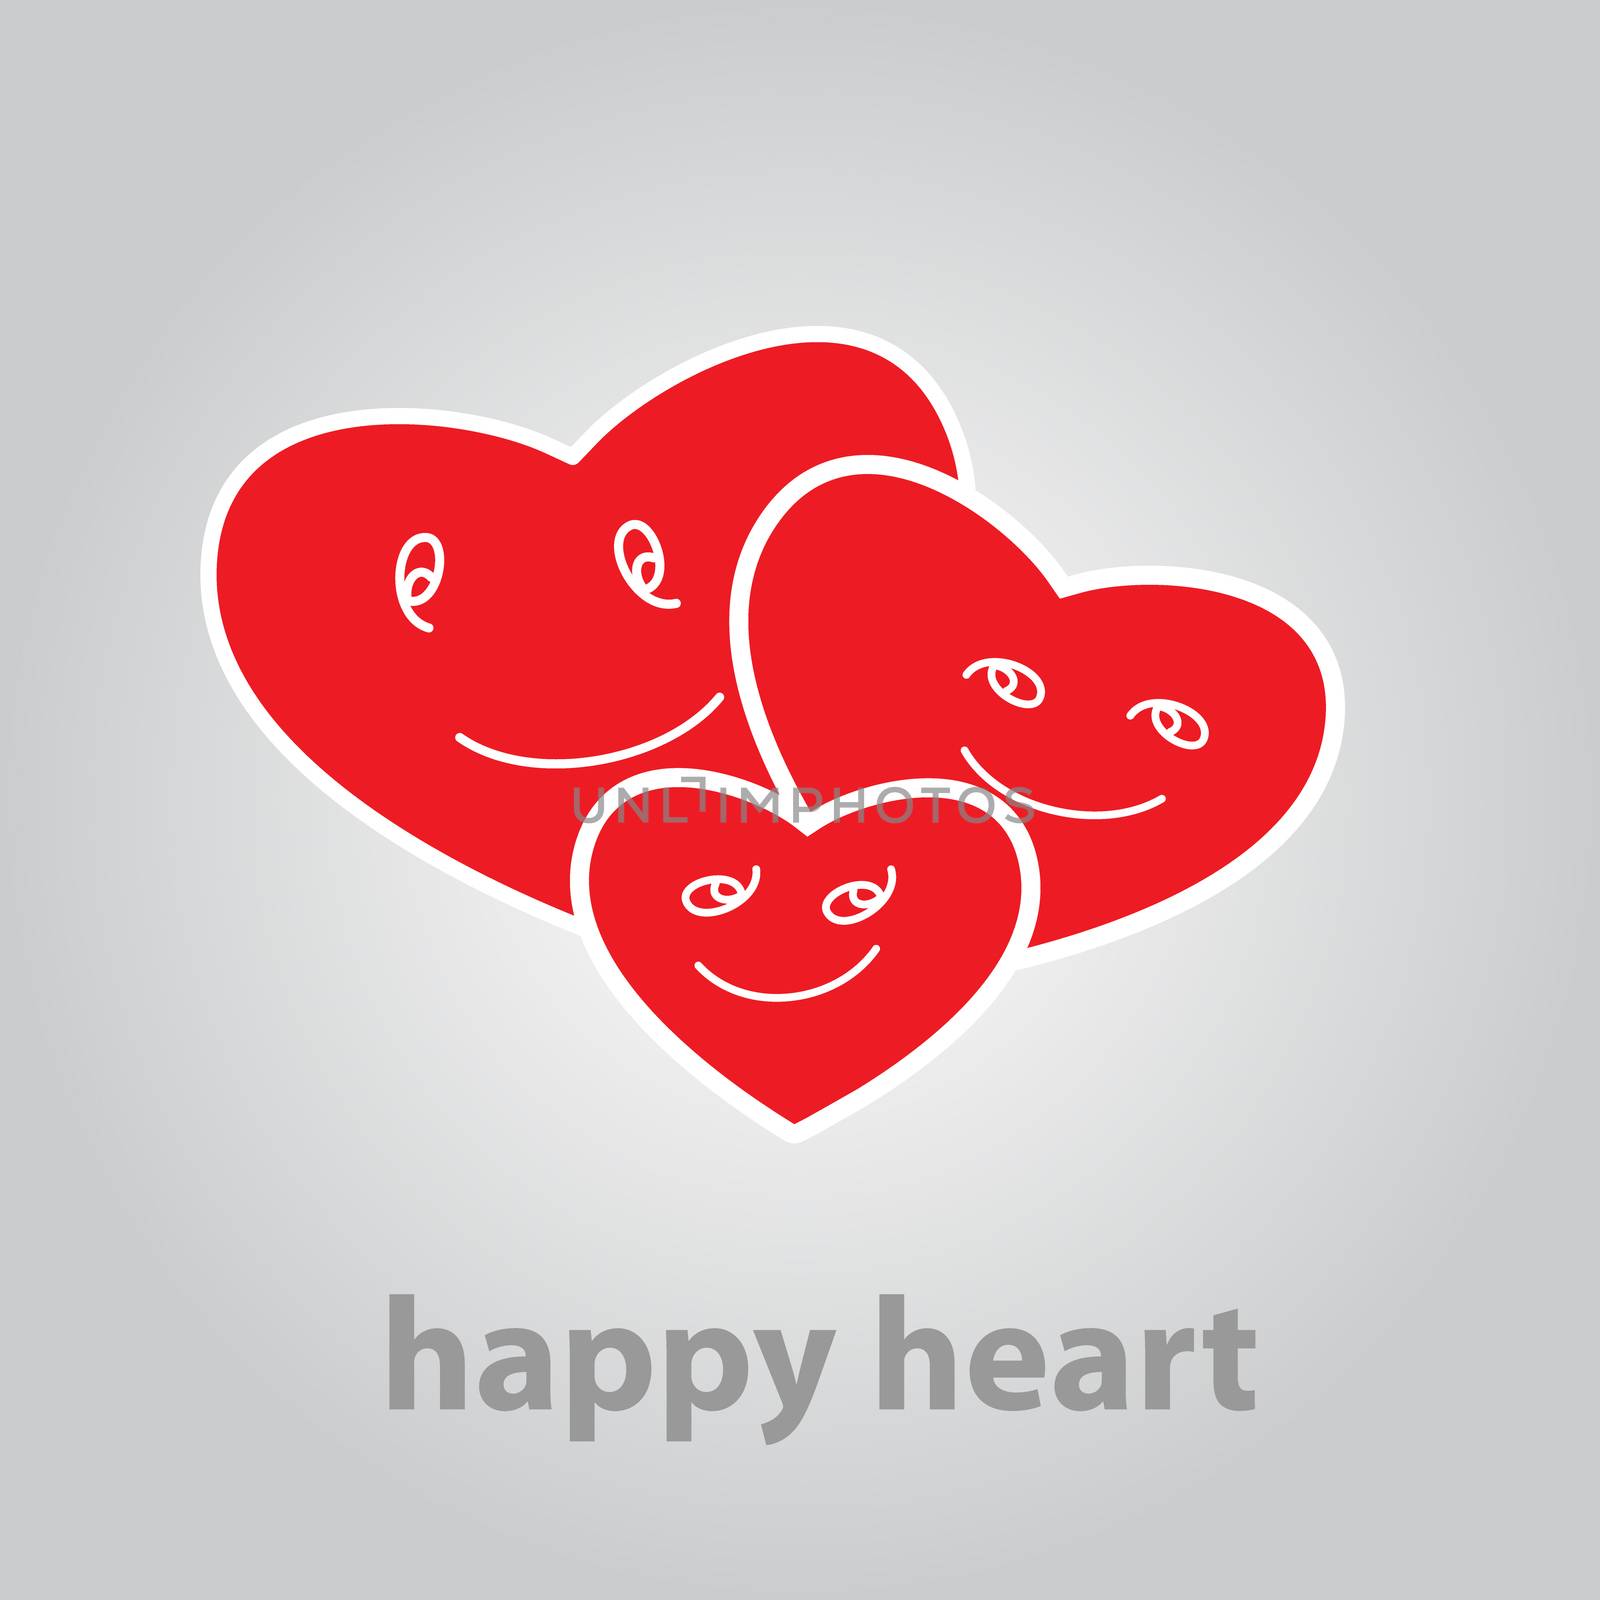 happy-heart by antoshkaforever